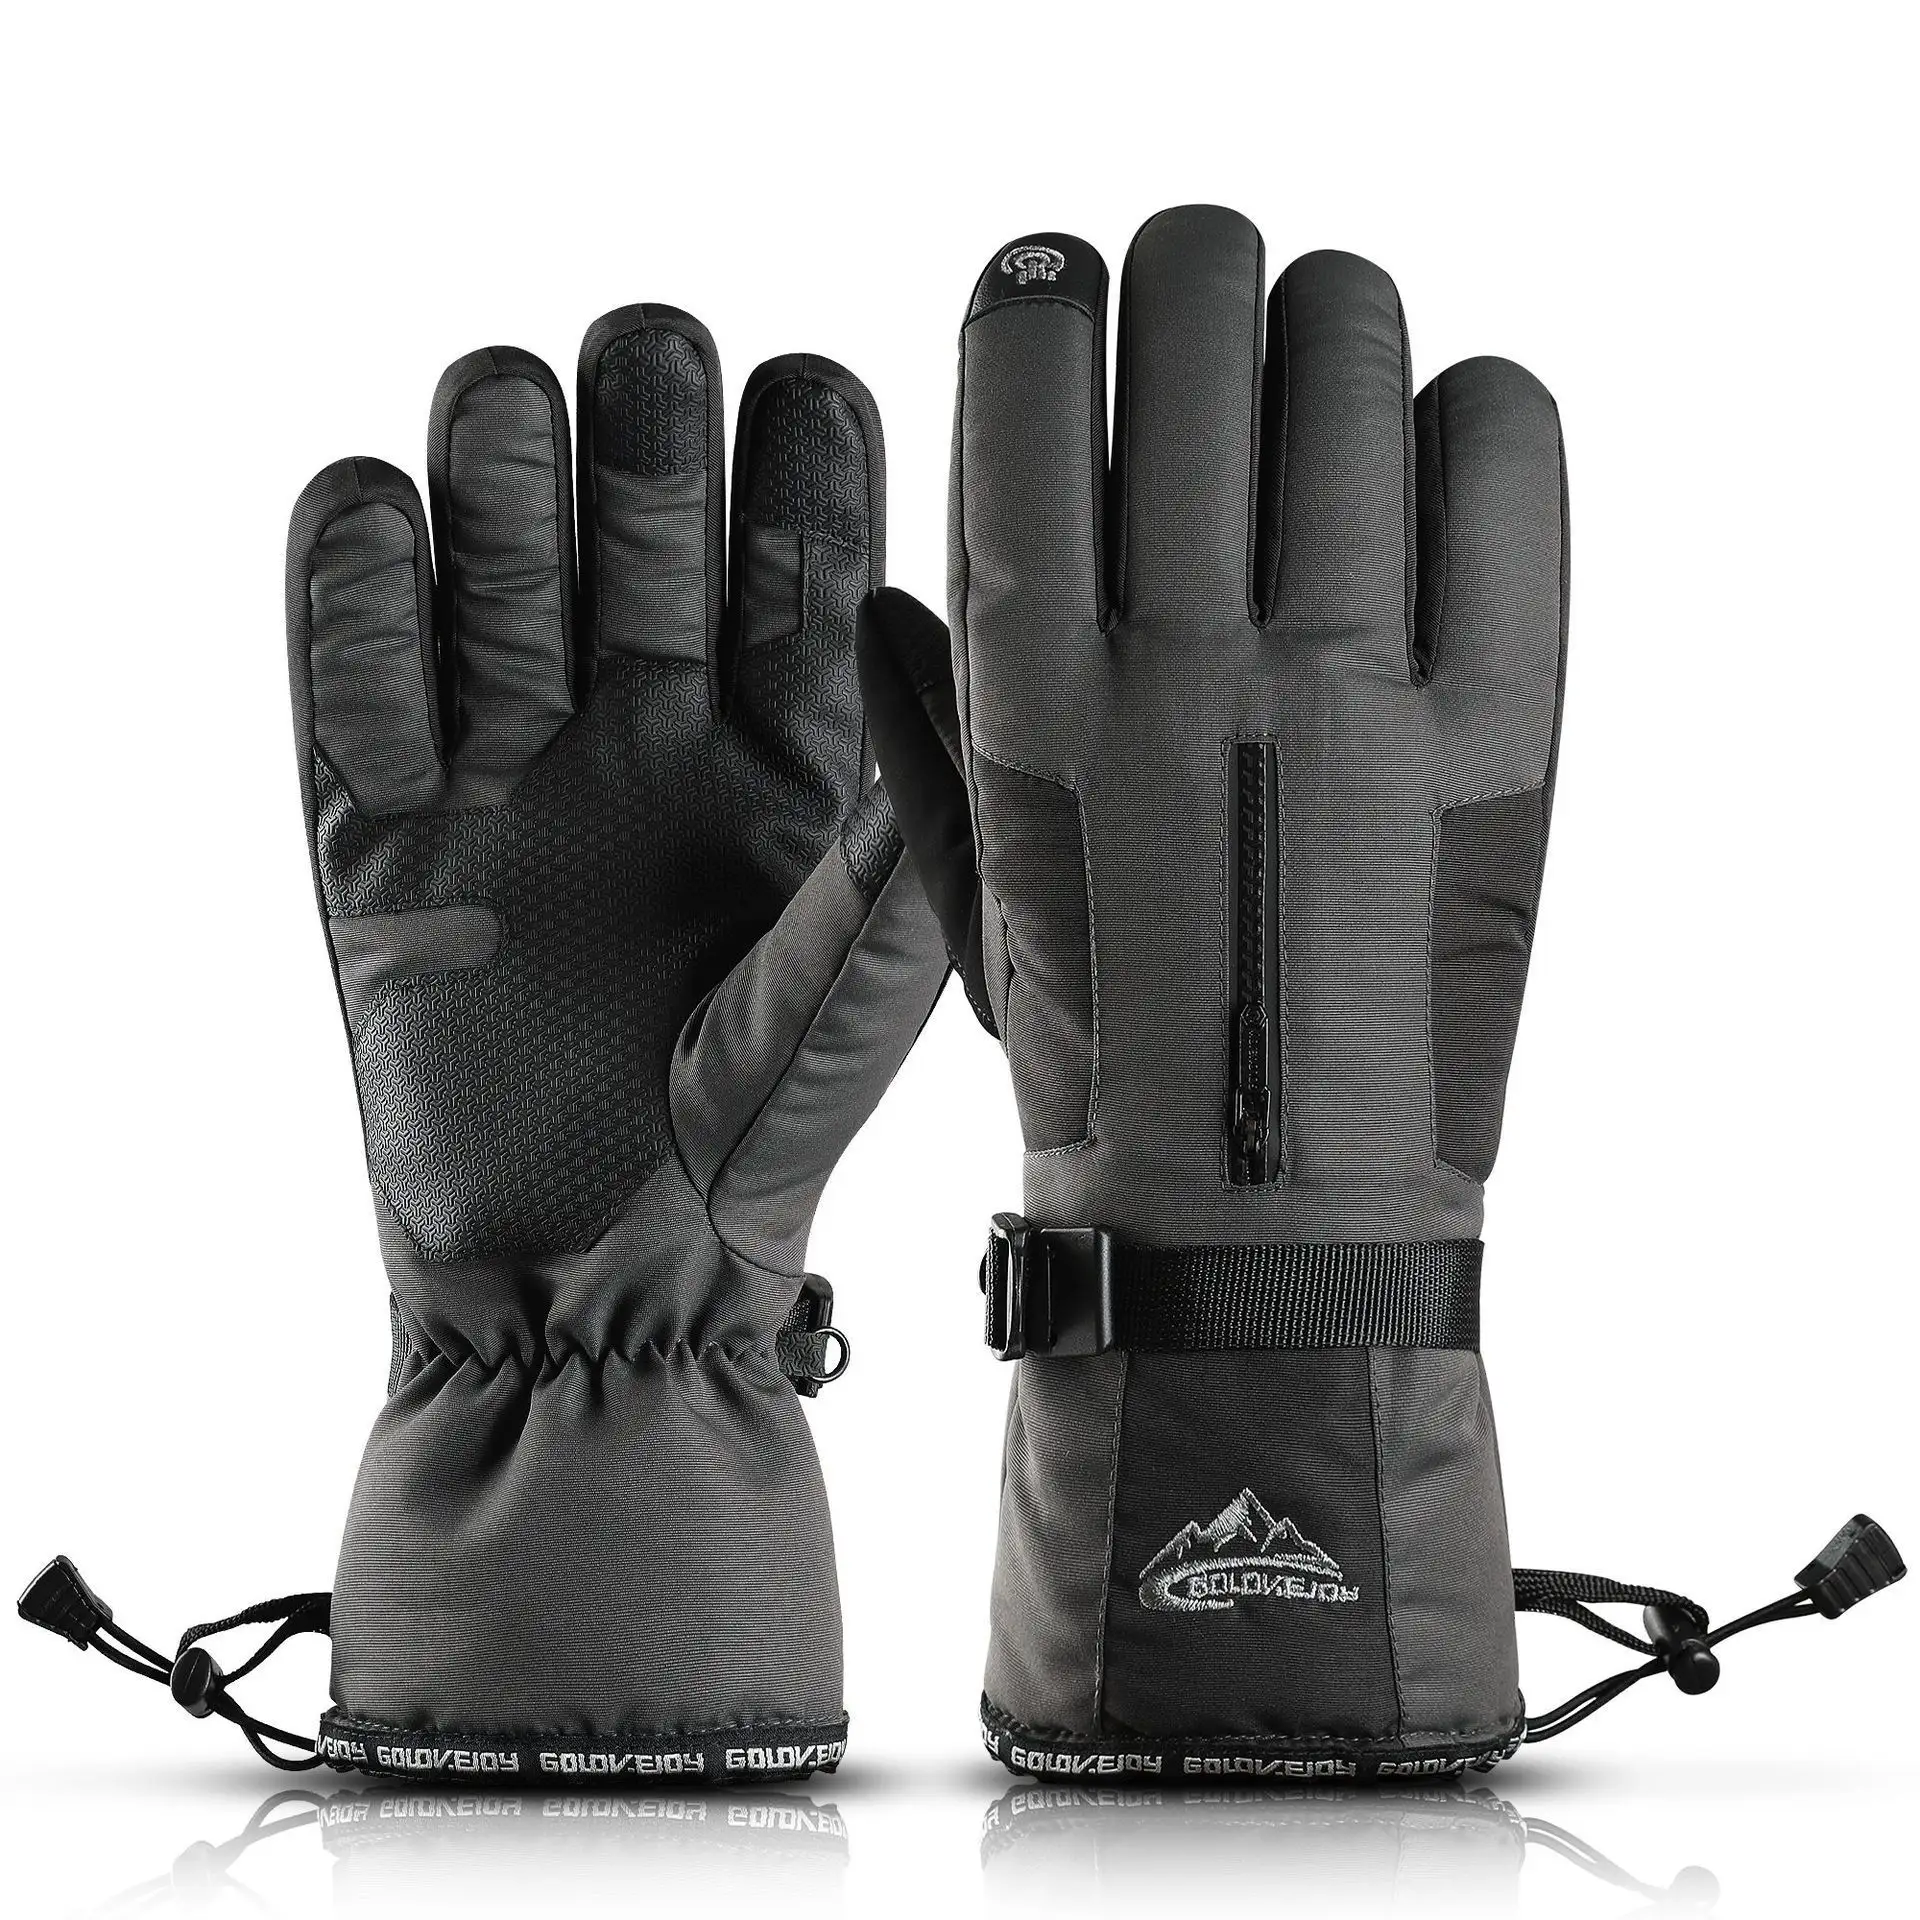 GOLOVEJOY Neue warme Outdoor-Renn handschuhe Wasserdichte Touchscreen-Ski handschuhe